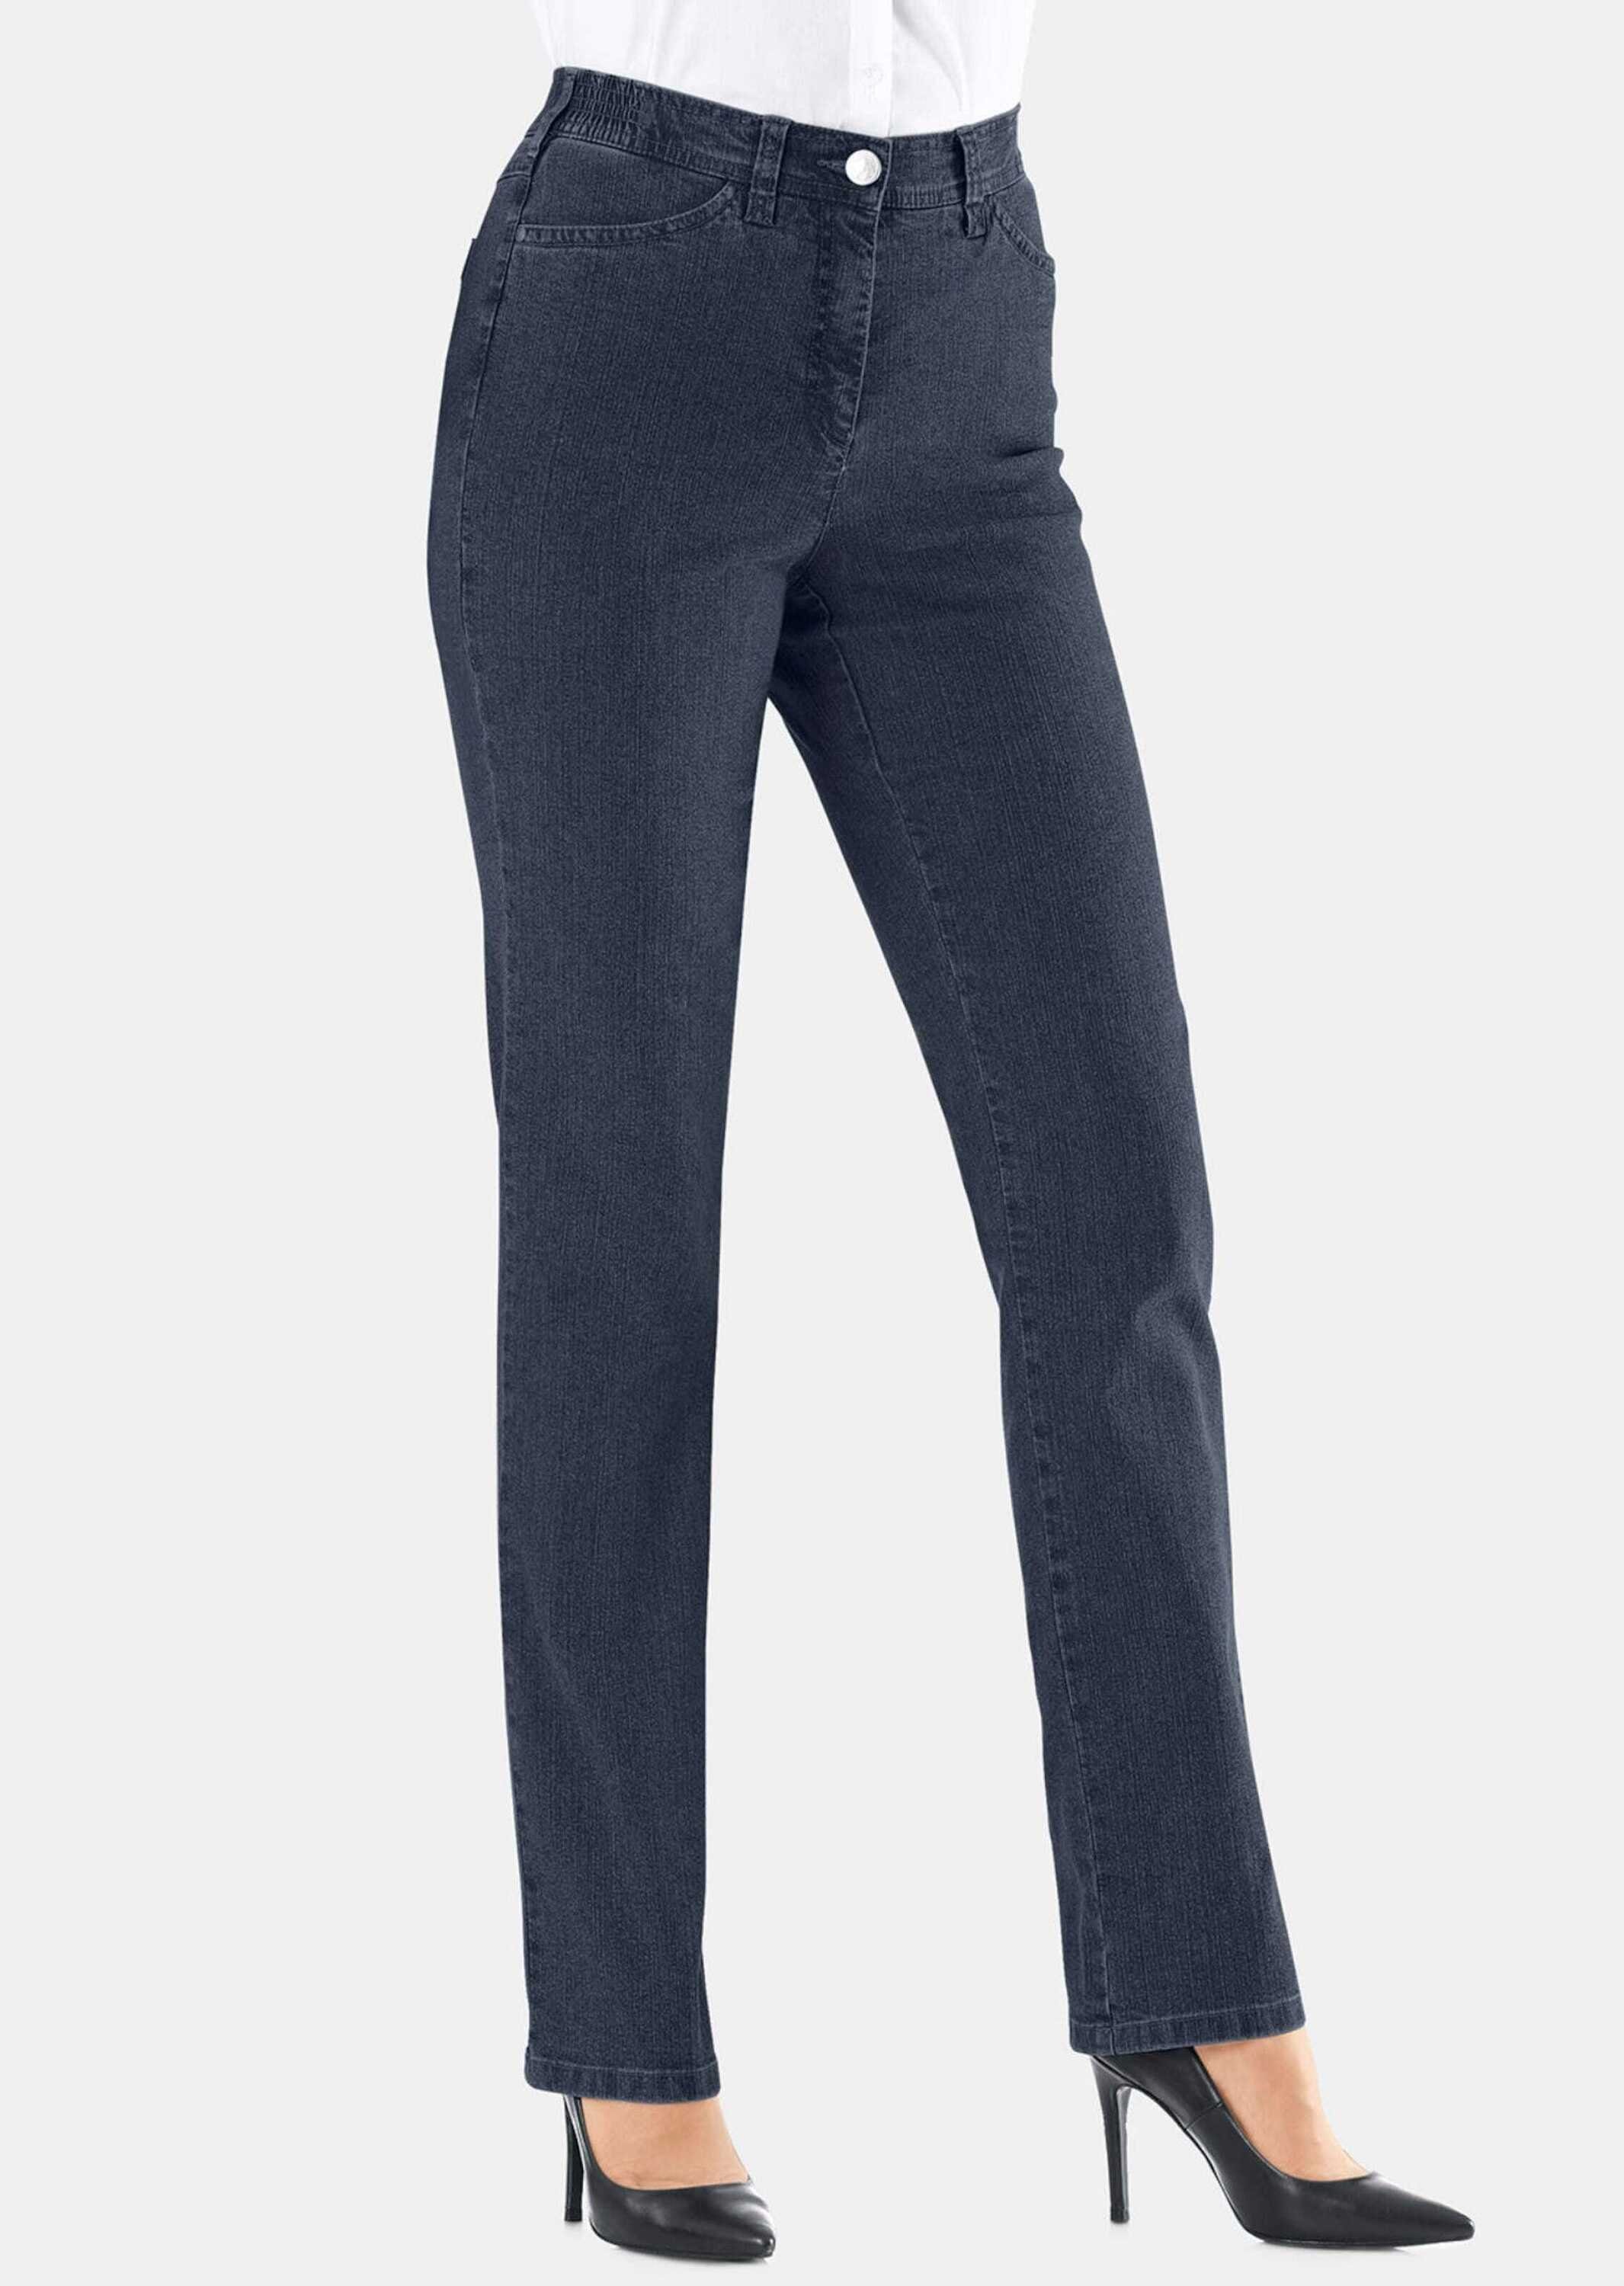 GOLDNER Bequeme Jeans Kurzgröße: Klassische Jeanshose ANNA dunkelblau